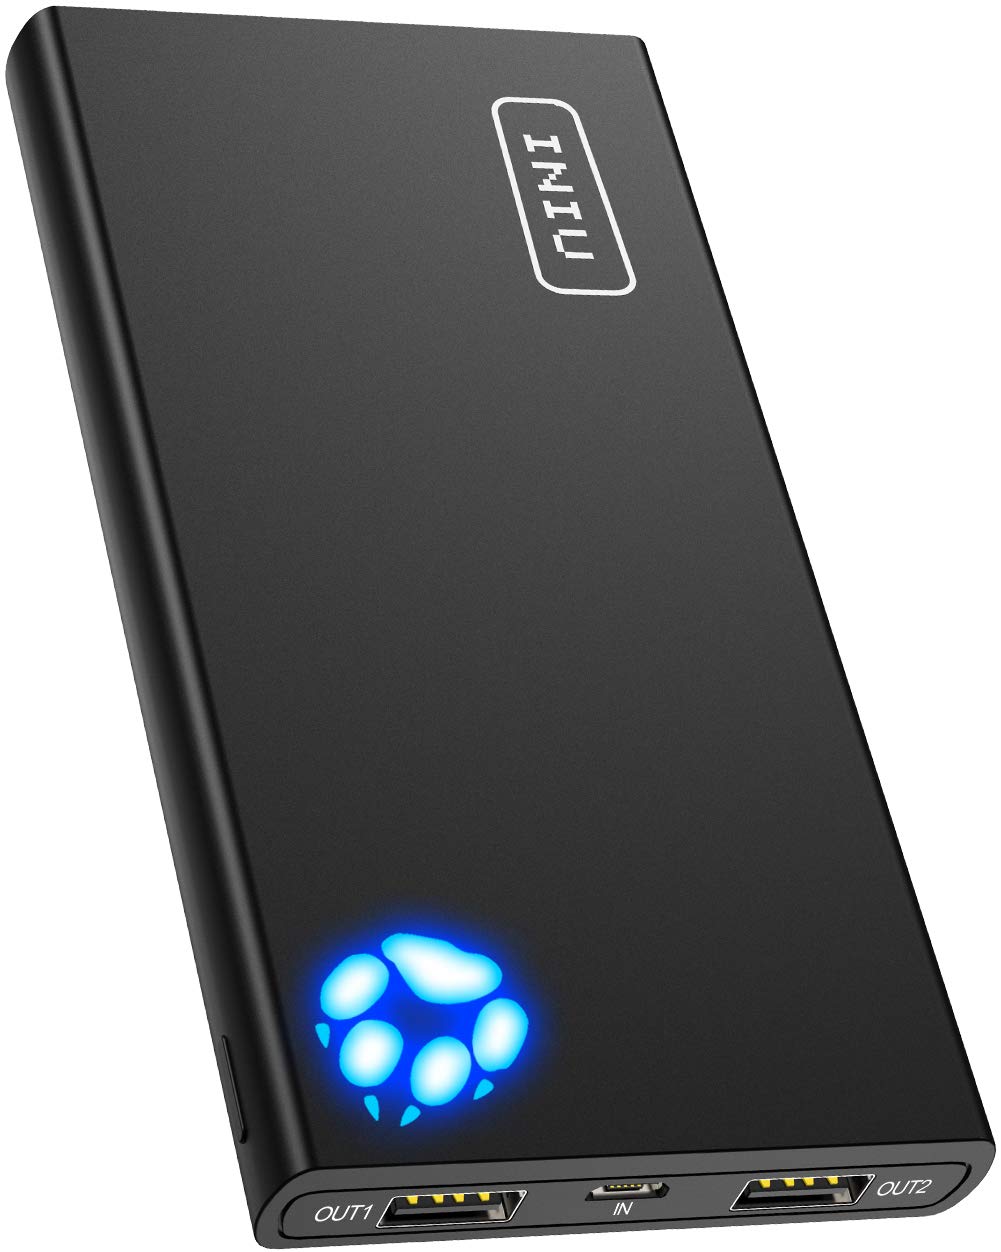 Power Bank Ultra Slim 10000 mAh Portable Charger Model: BG 100